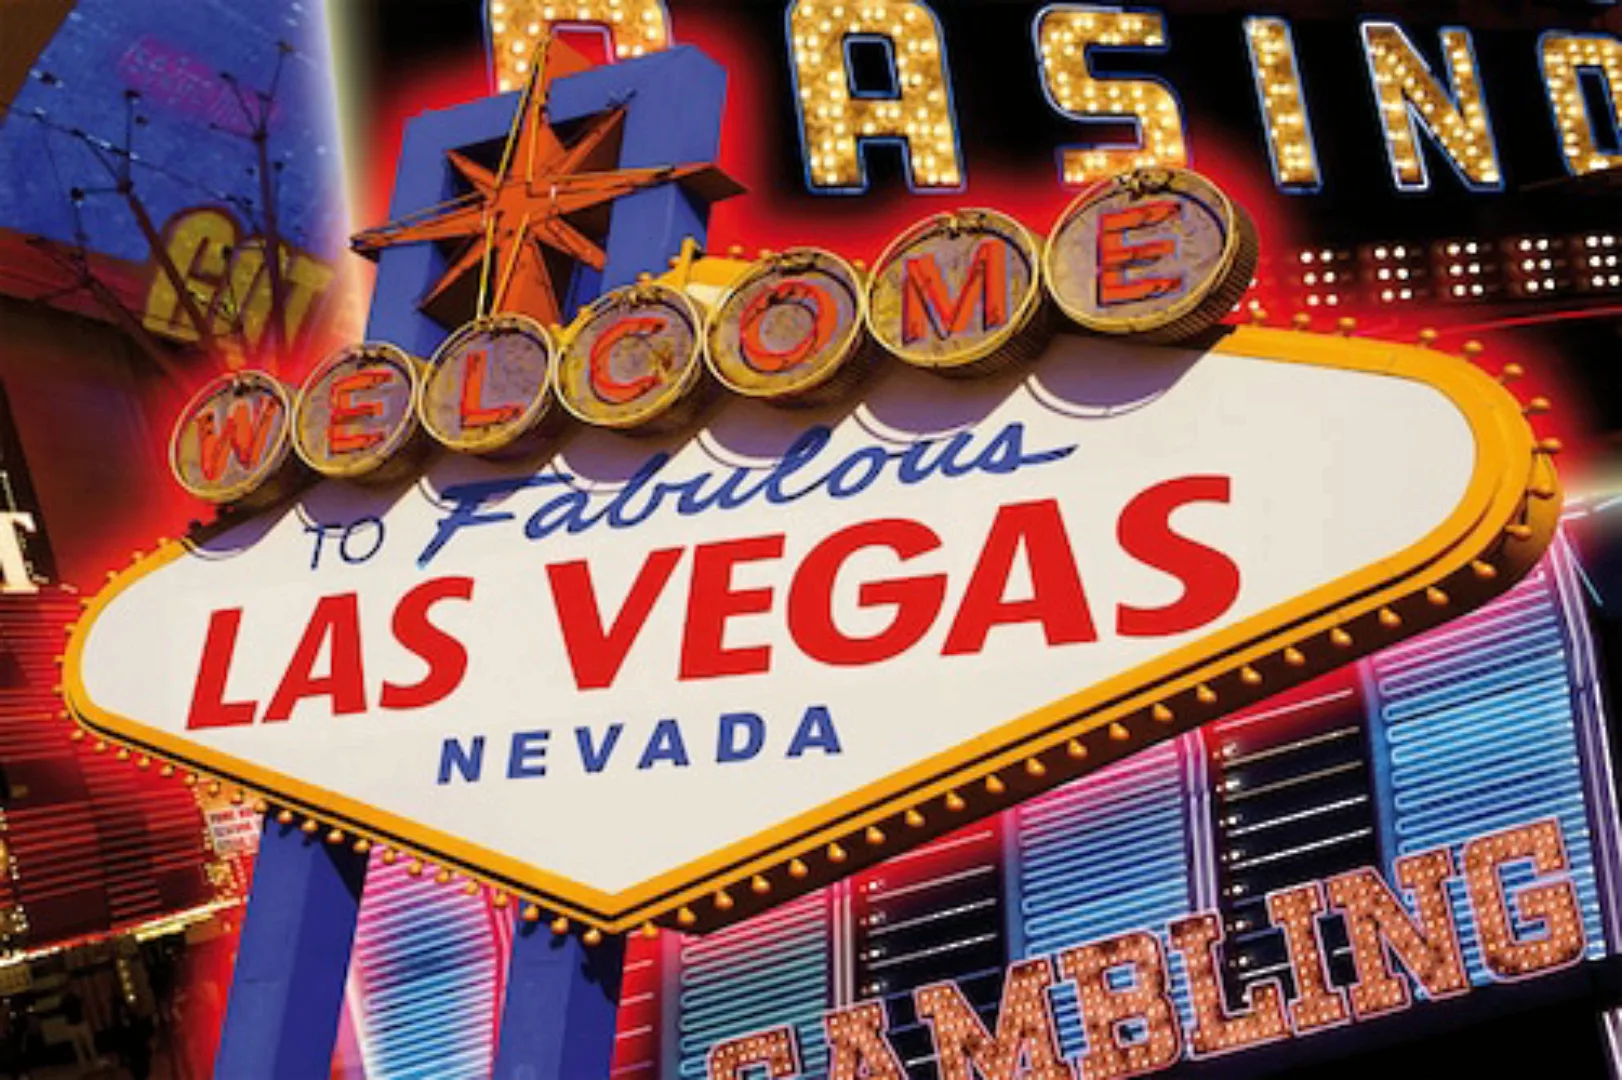 Papermoon Fototapete »Las Vegas«, matt günstig online kaufen